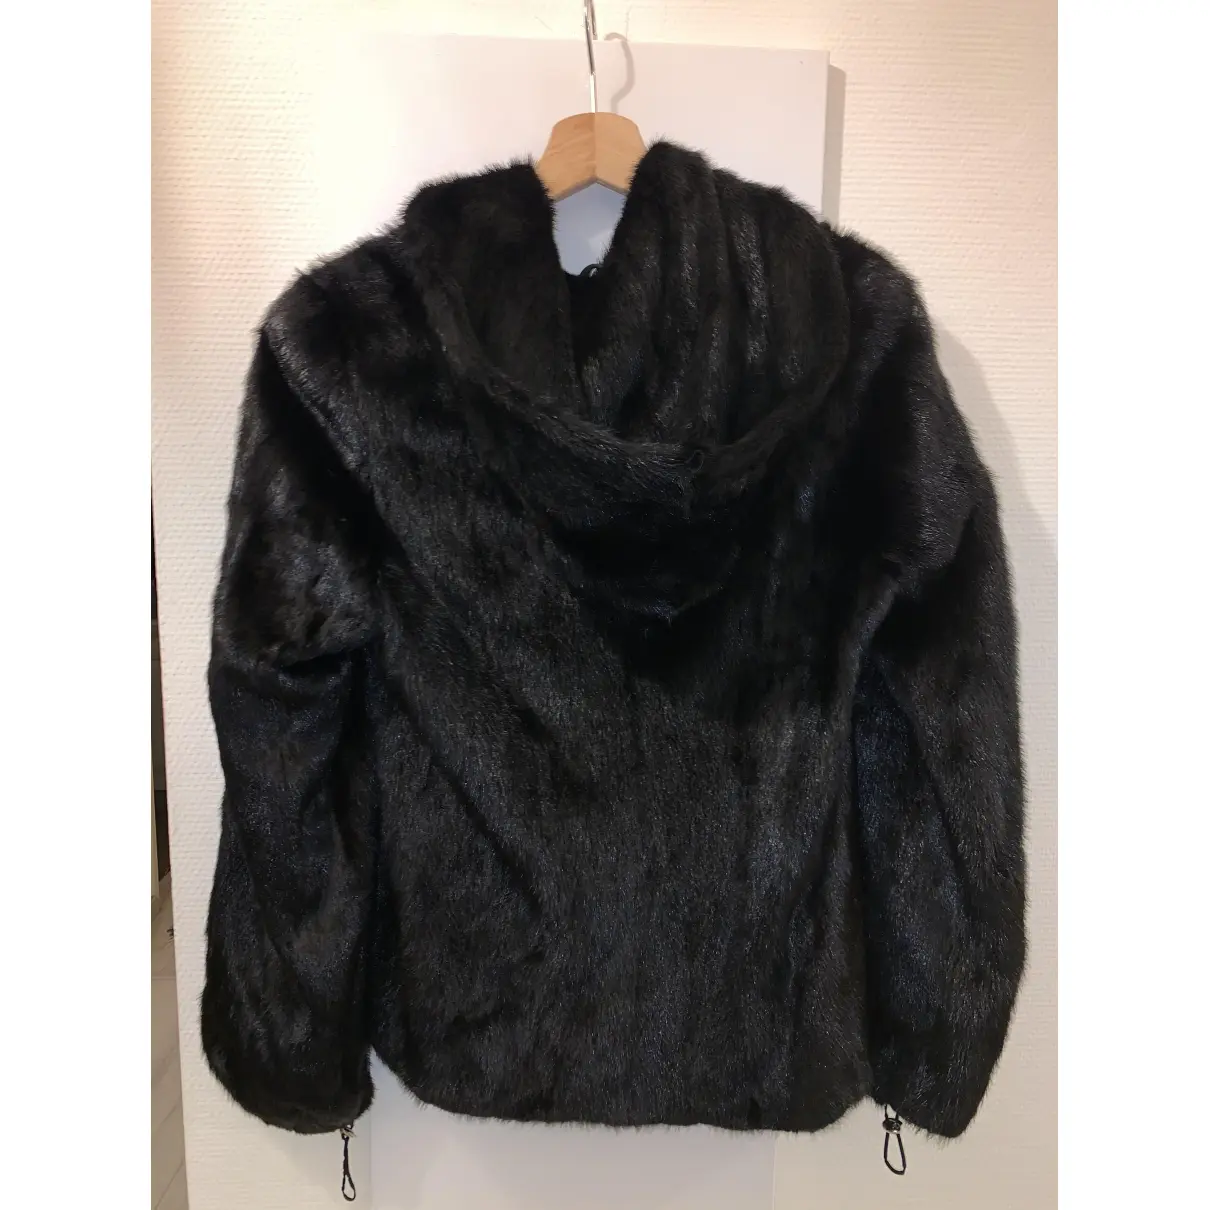 Buy Mala Mati Marconi Mink coat online